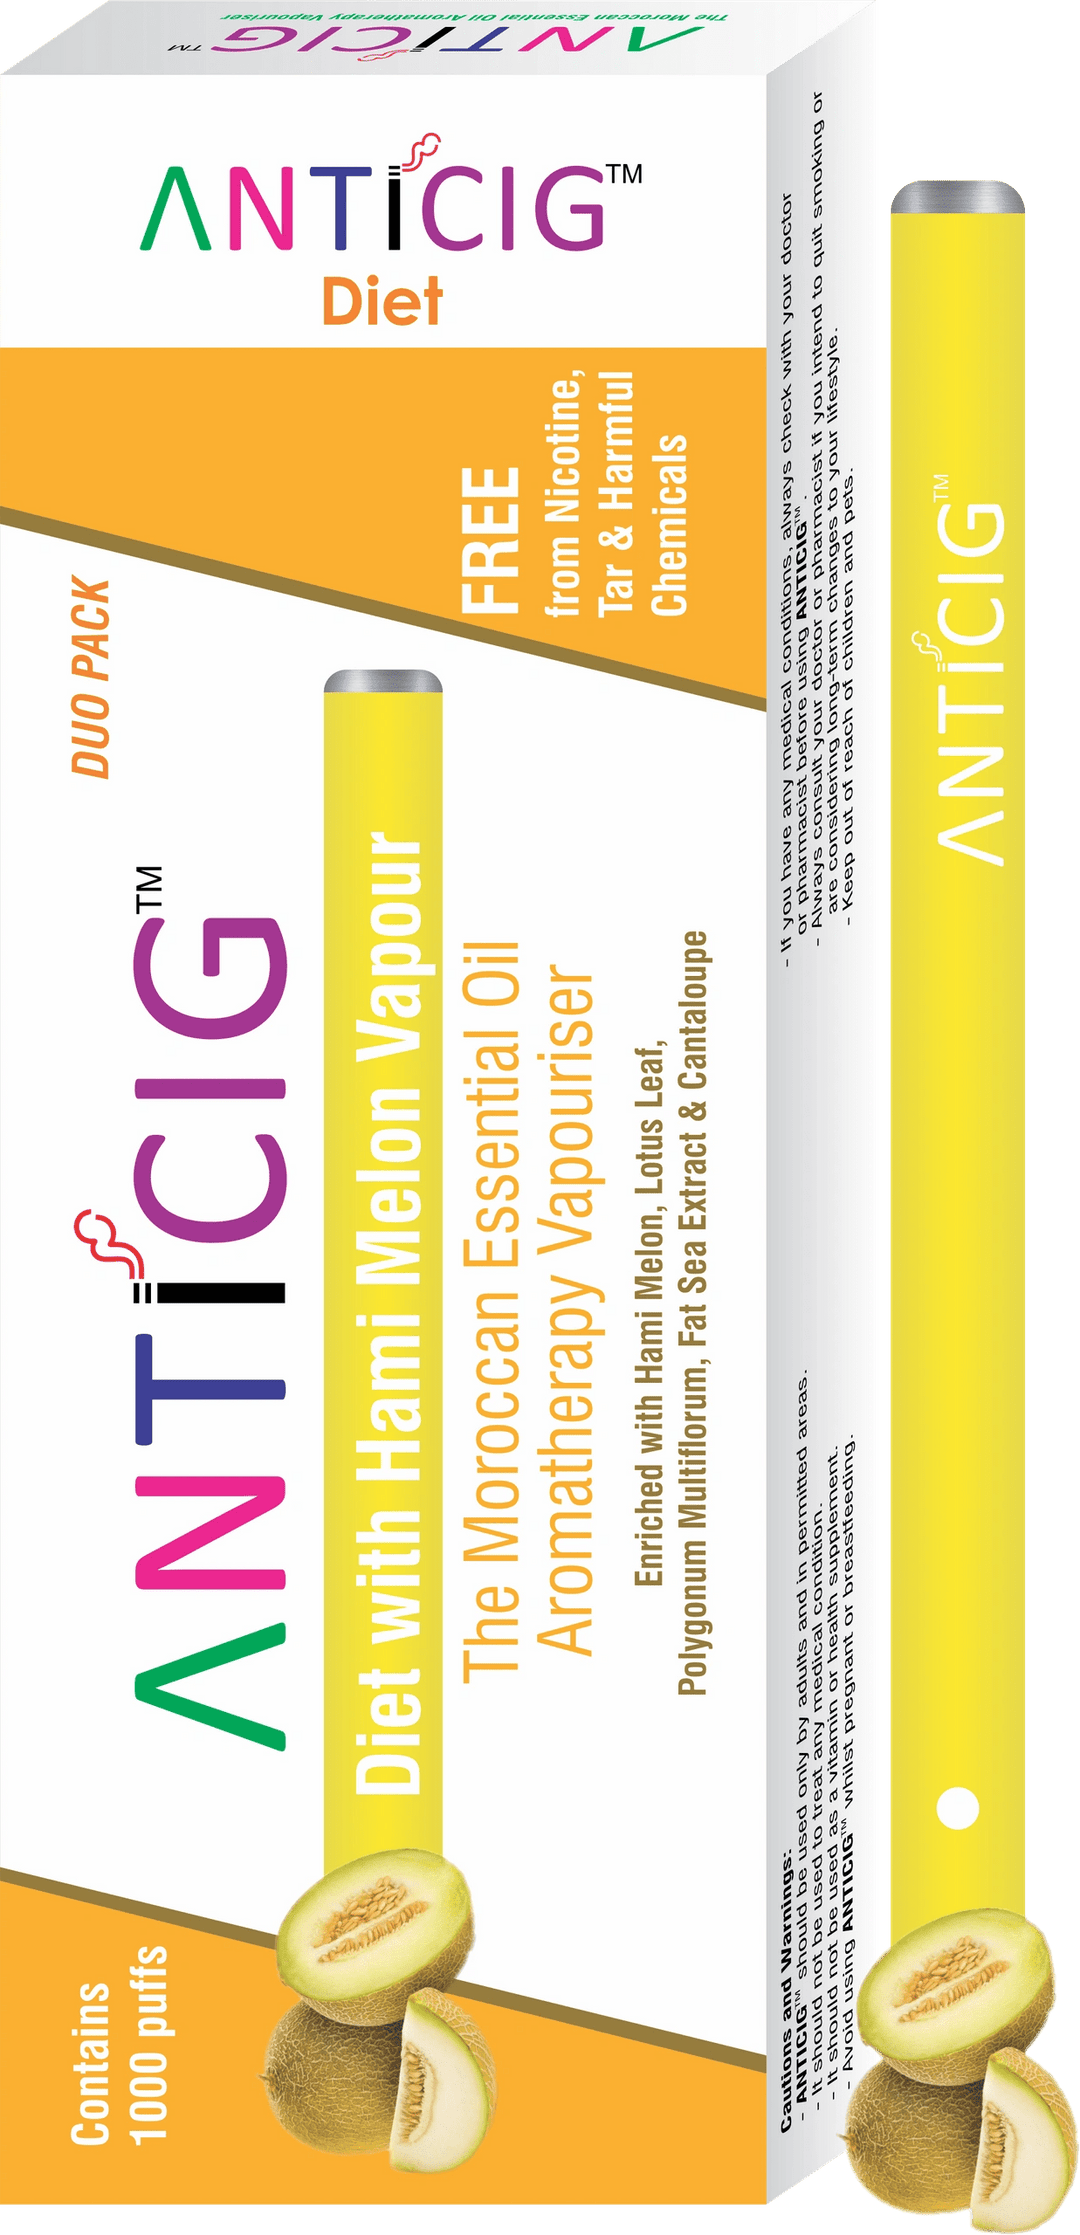 anticig aromatherapy vapouriser 0 nicotine -بدون نيكوتين uae vapor - 15